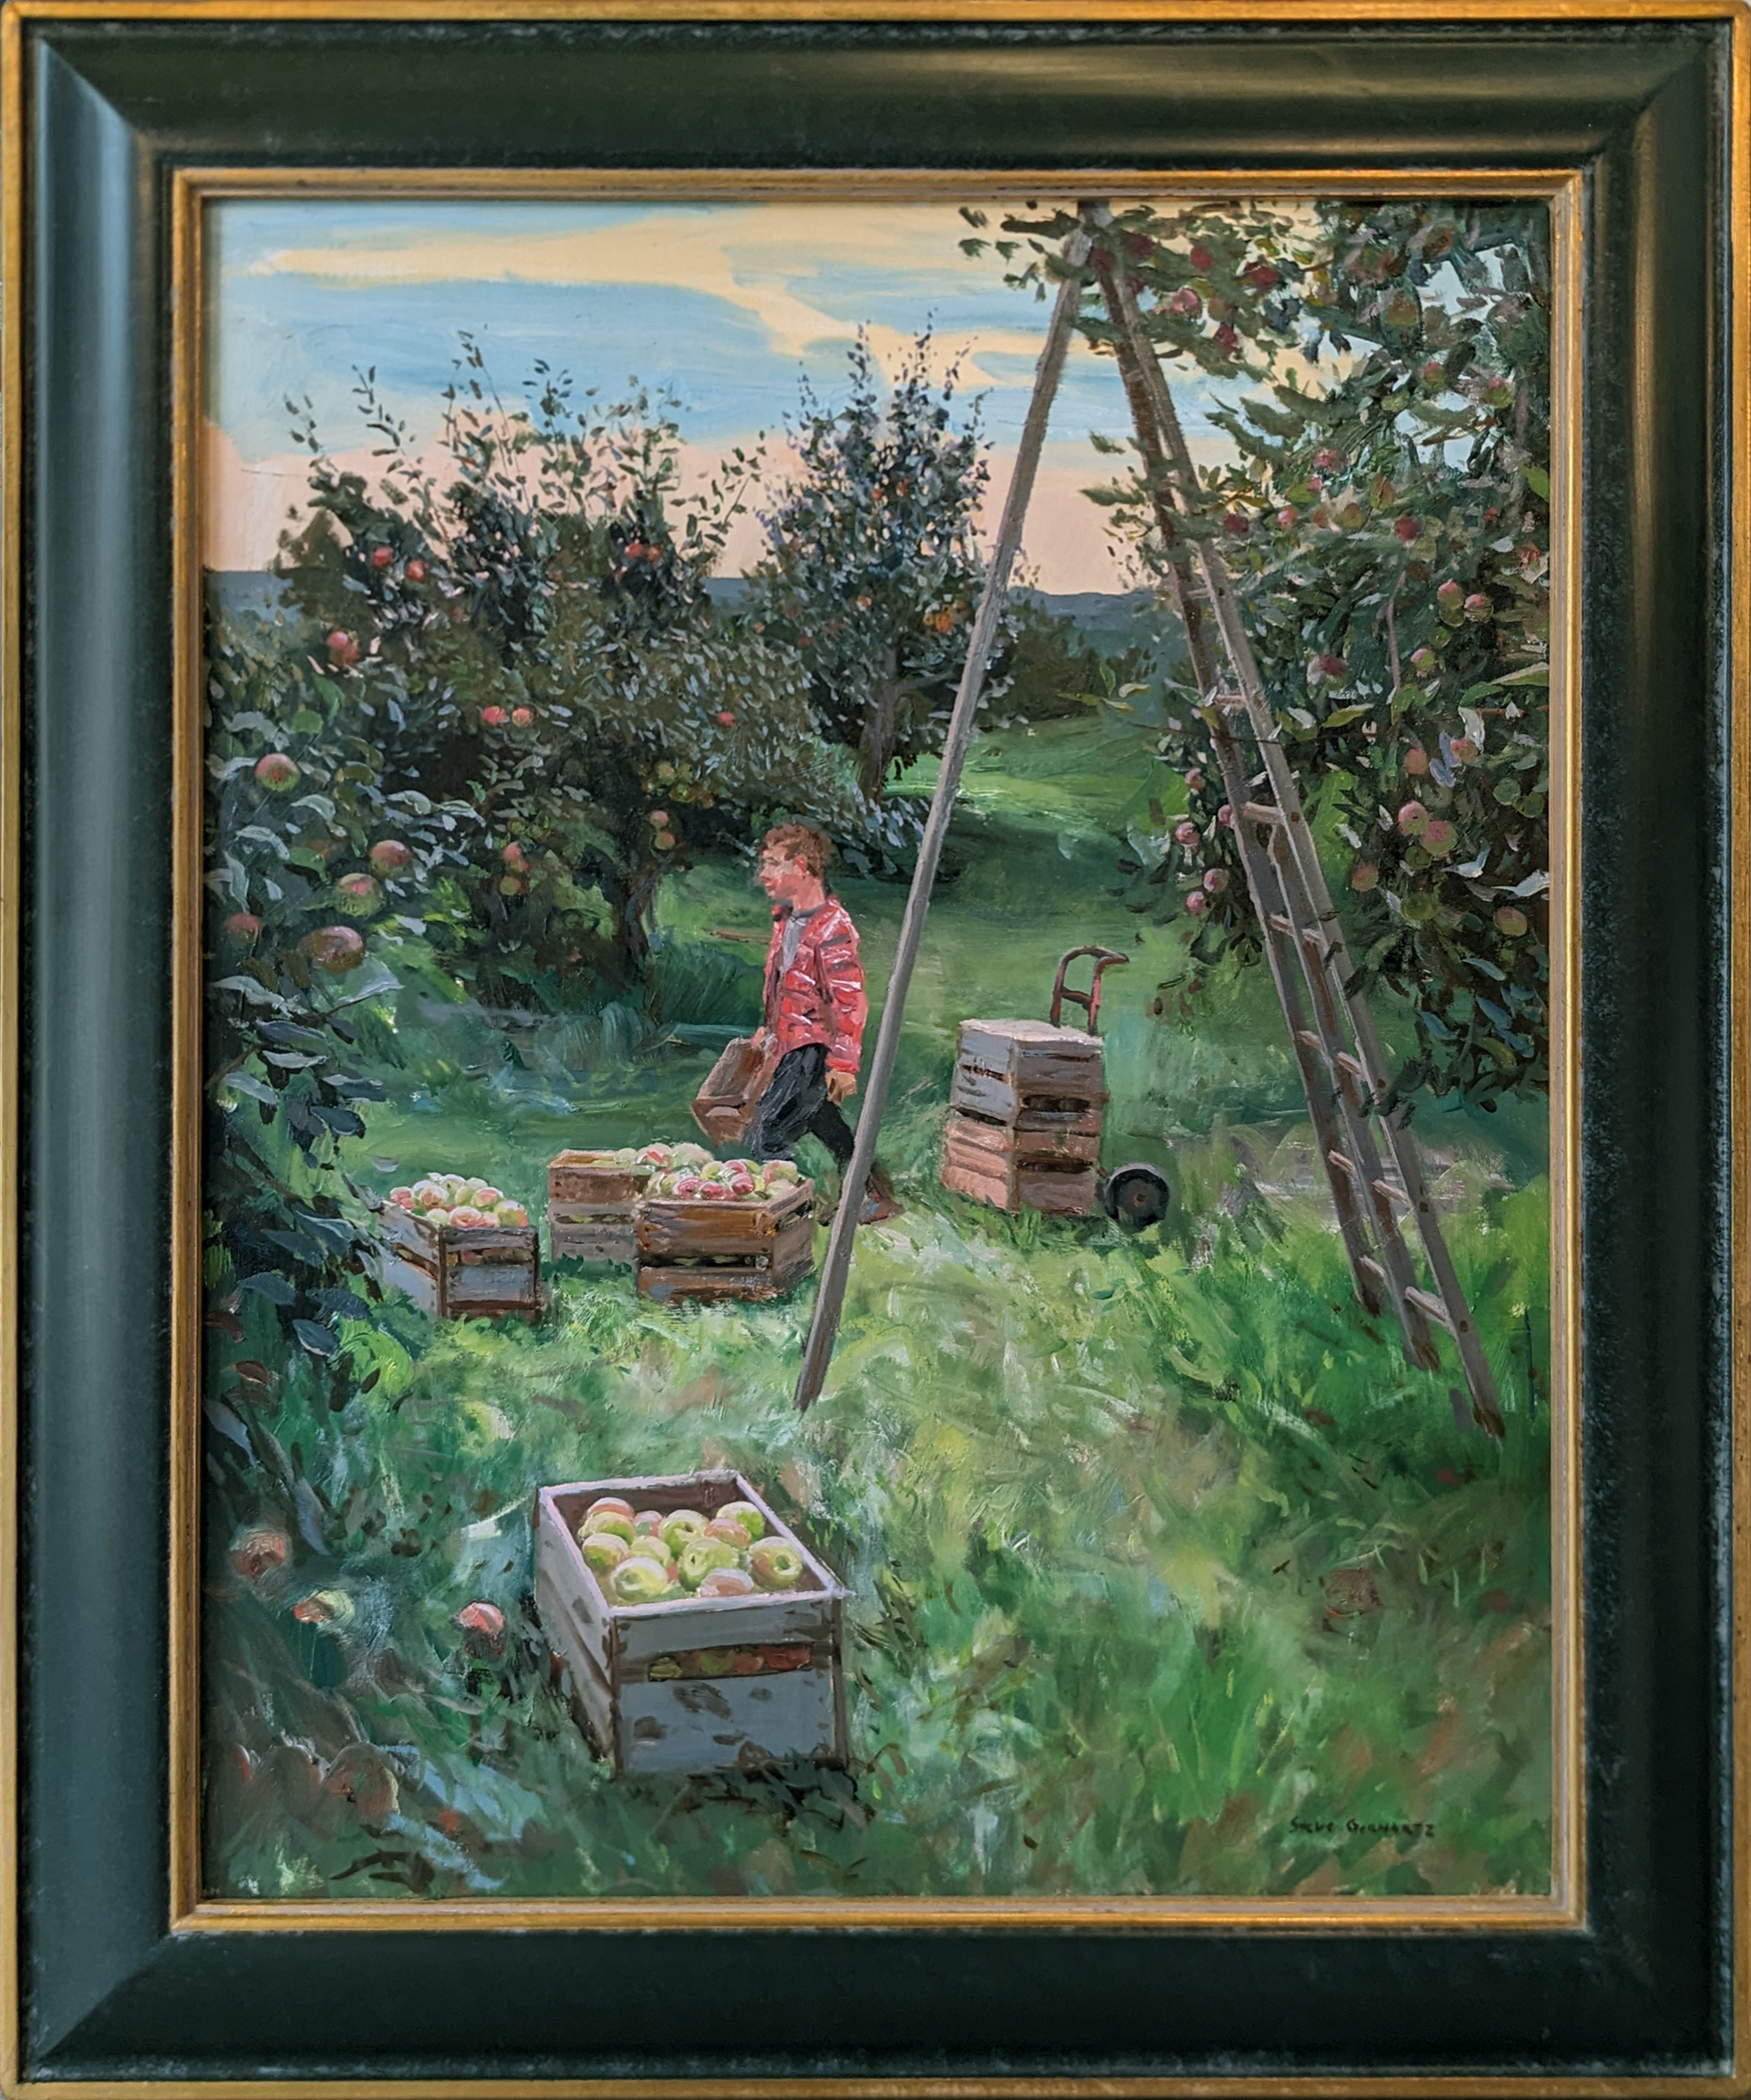 Whispering Orchard by Steve Gerhartz